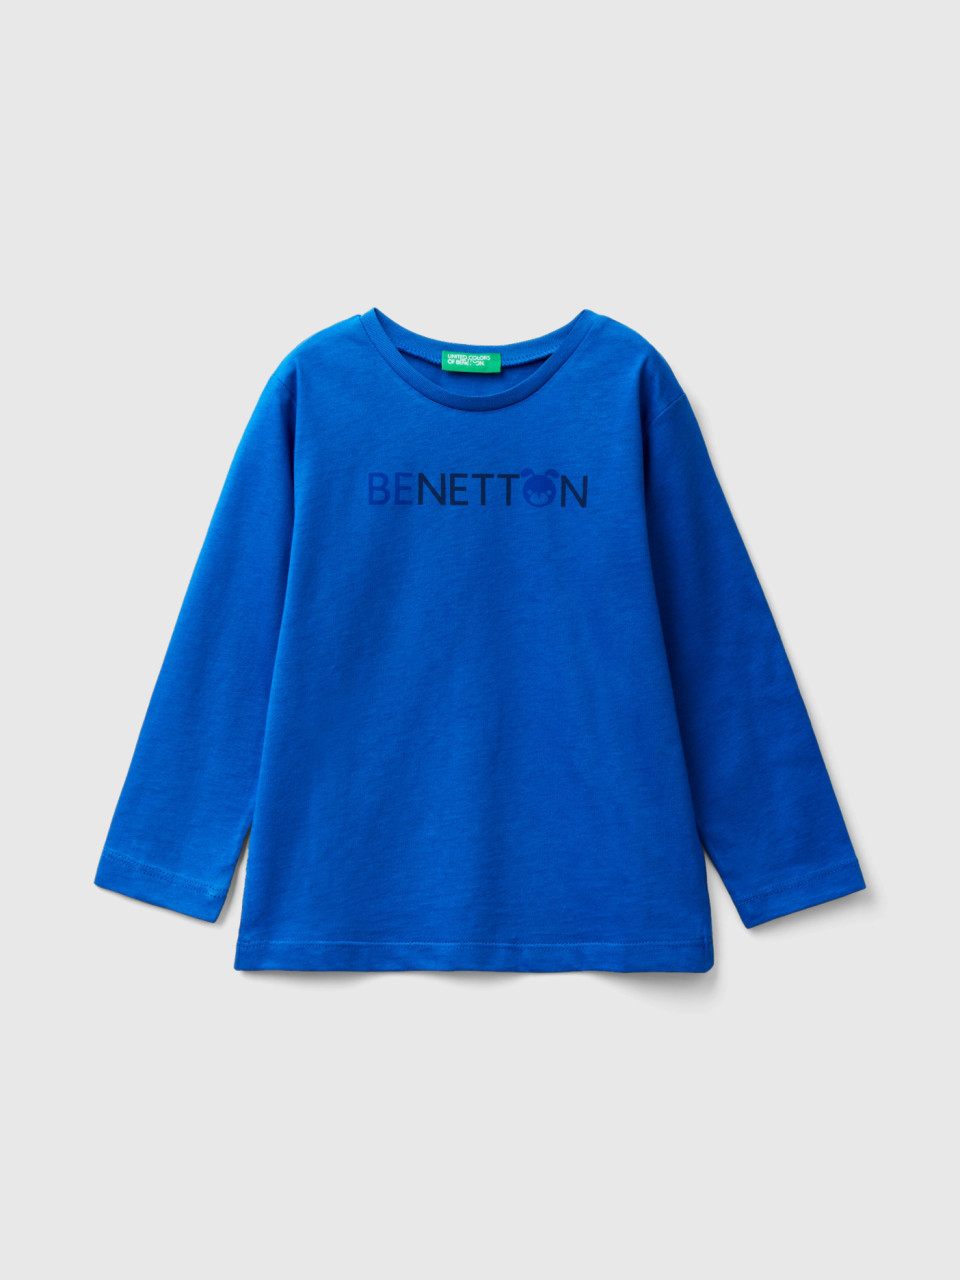 Benetton, Long Sleeve Organic Cotton T-shirt, Bright Blue, Kids